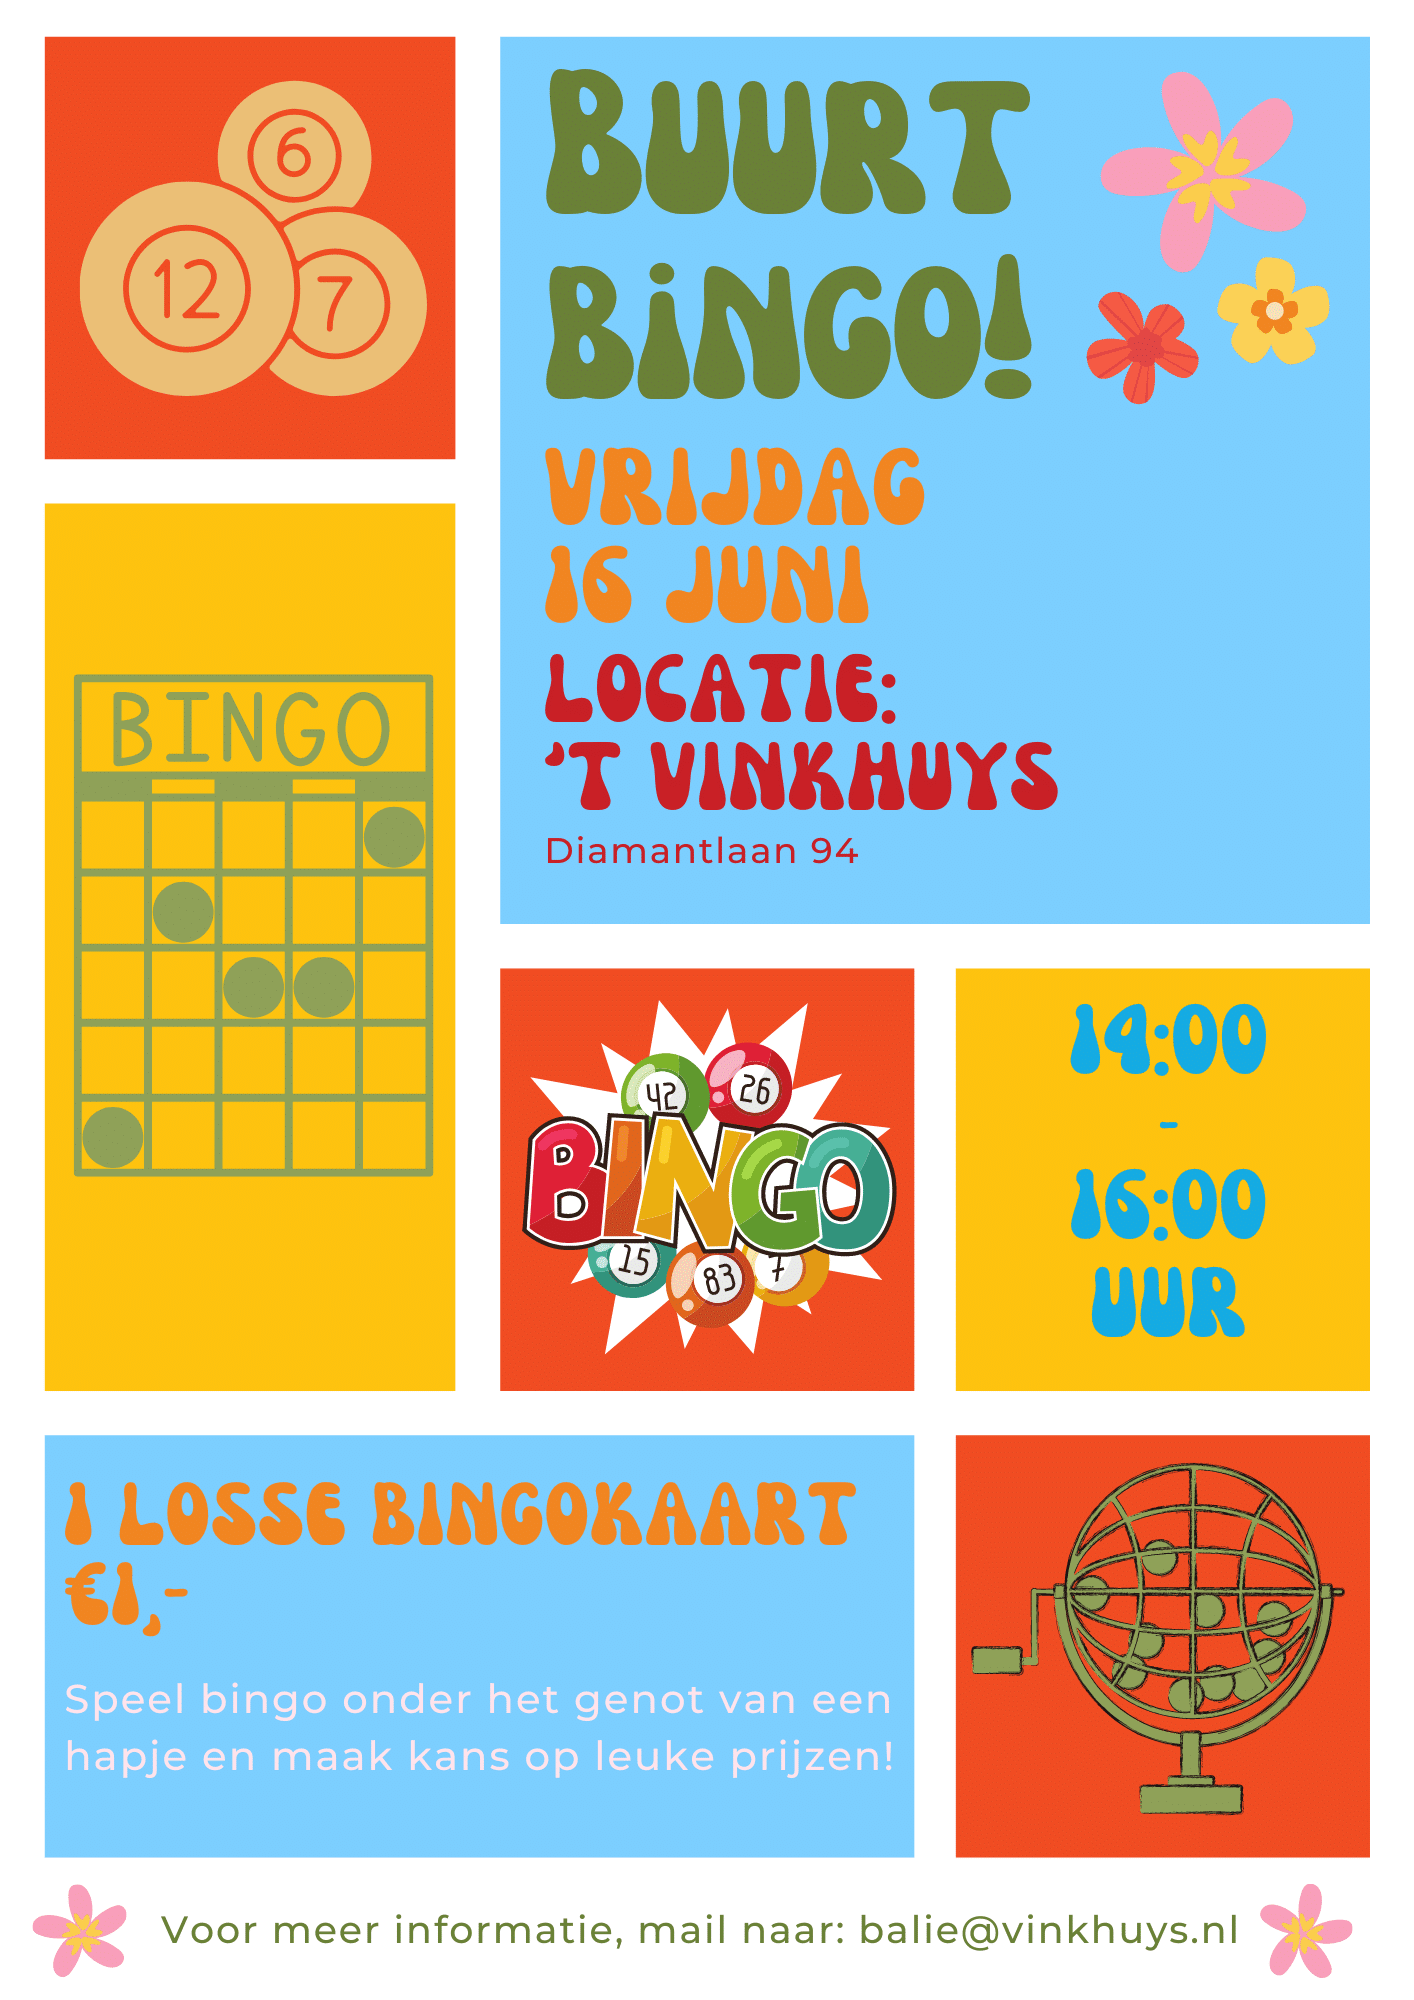 Buurt bingo- 16 juni